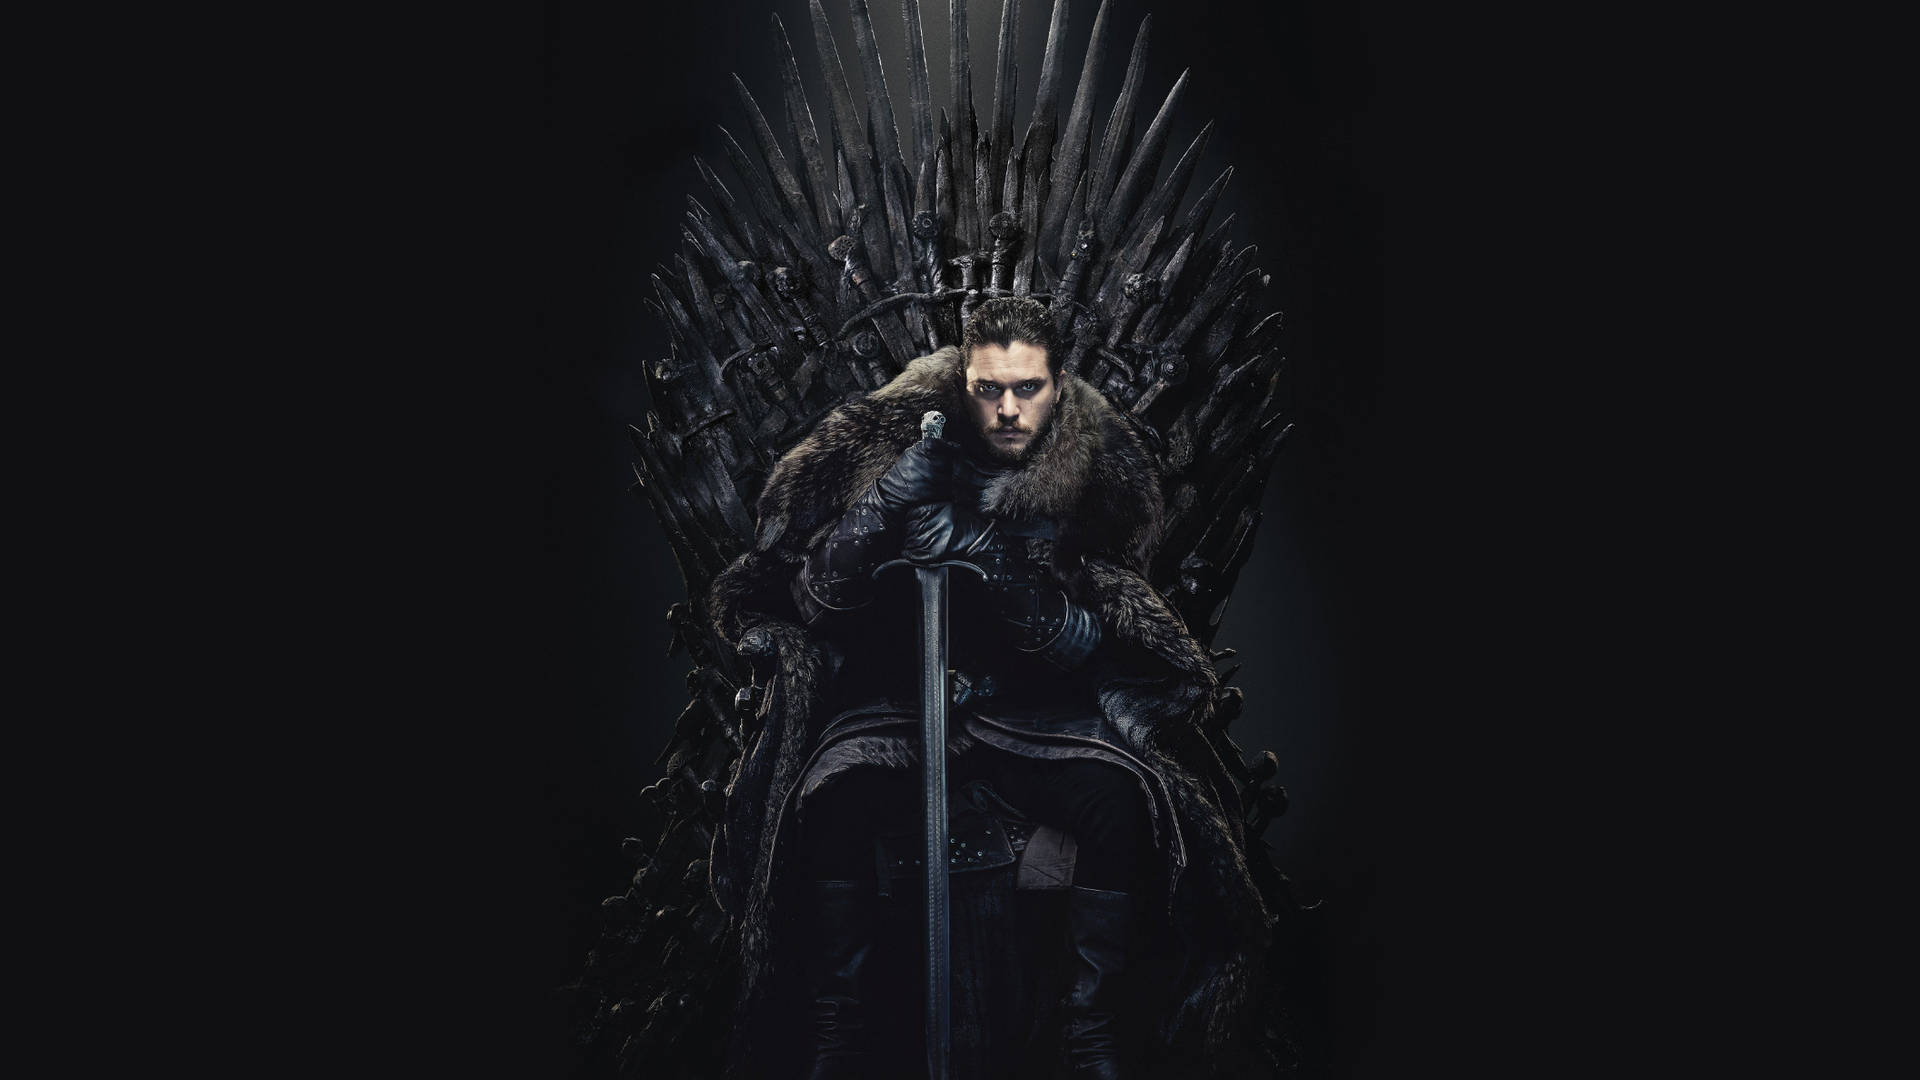 100+] Jon Snow Game Of Thrones Wallpapers | Wallpapers.com